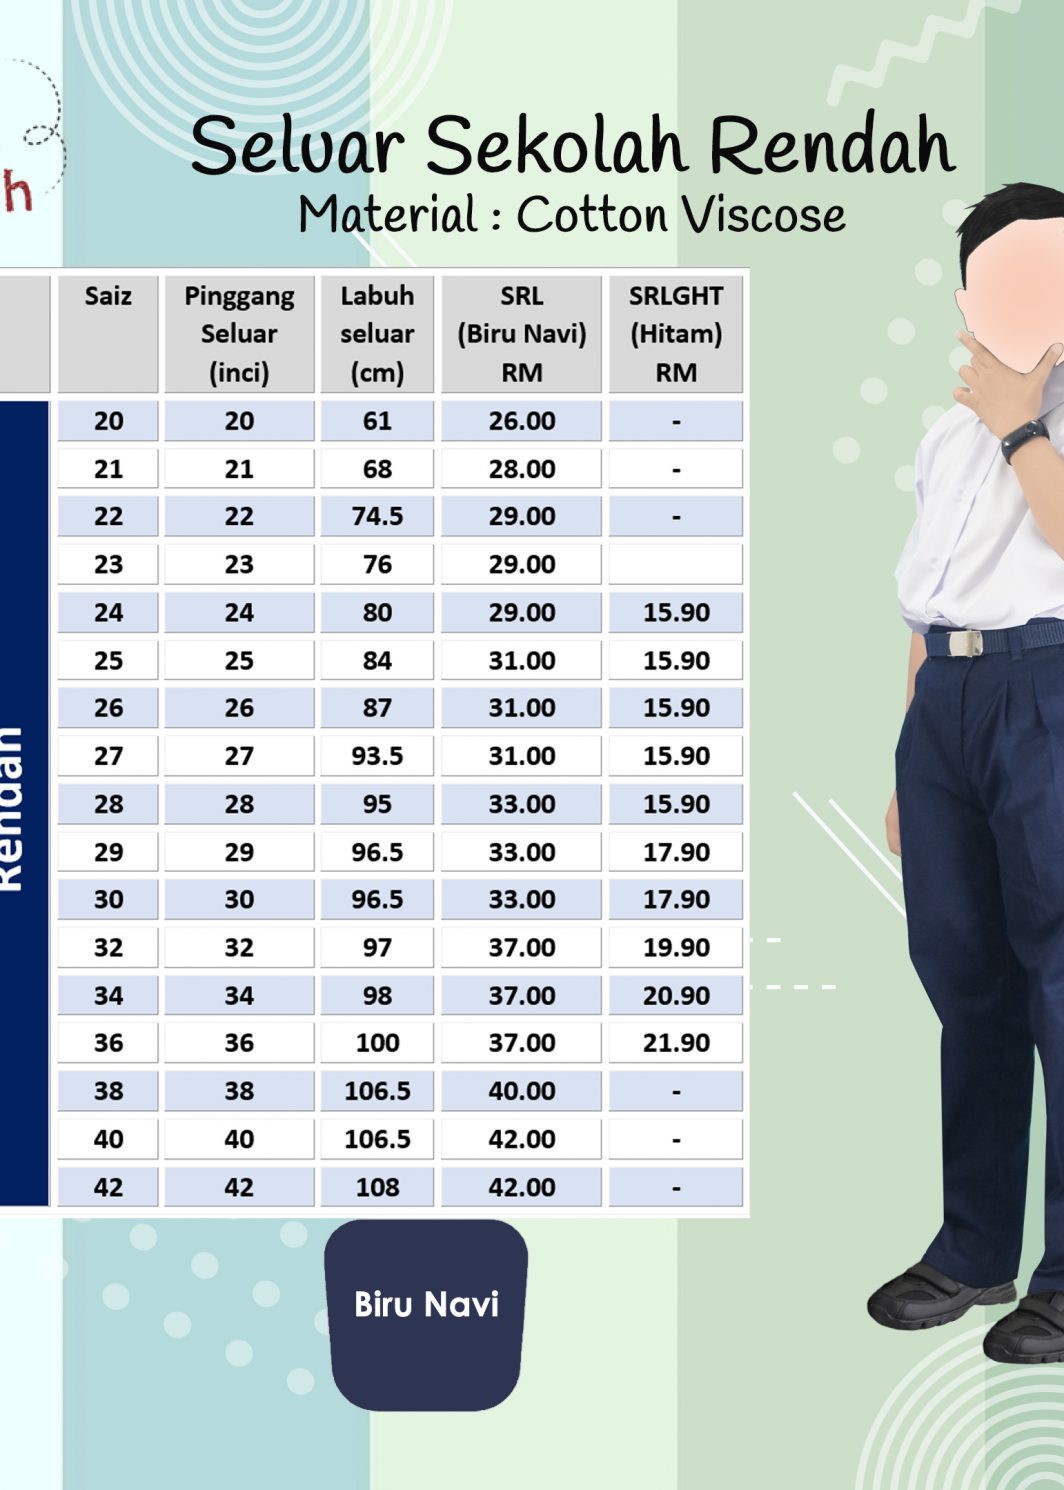 Ukuran Baju Sekolah Rendah Lelaki